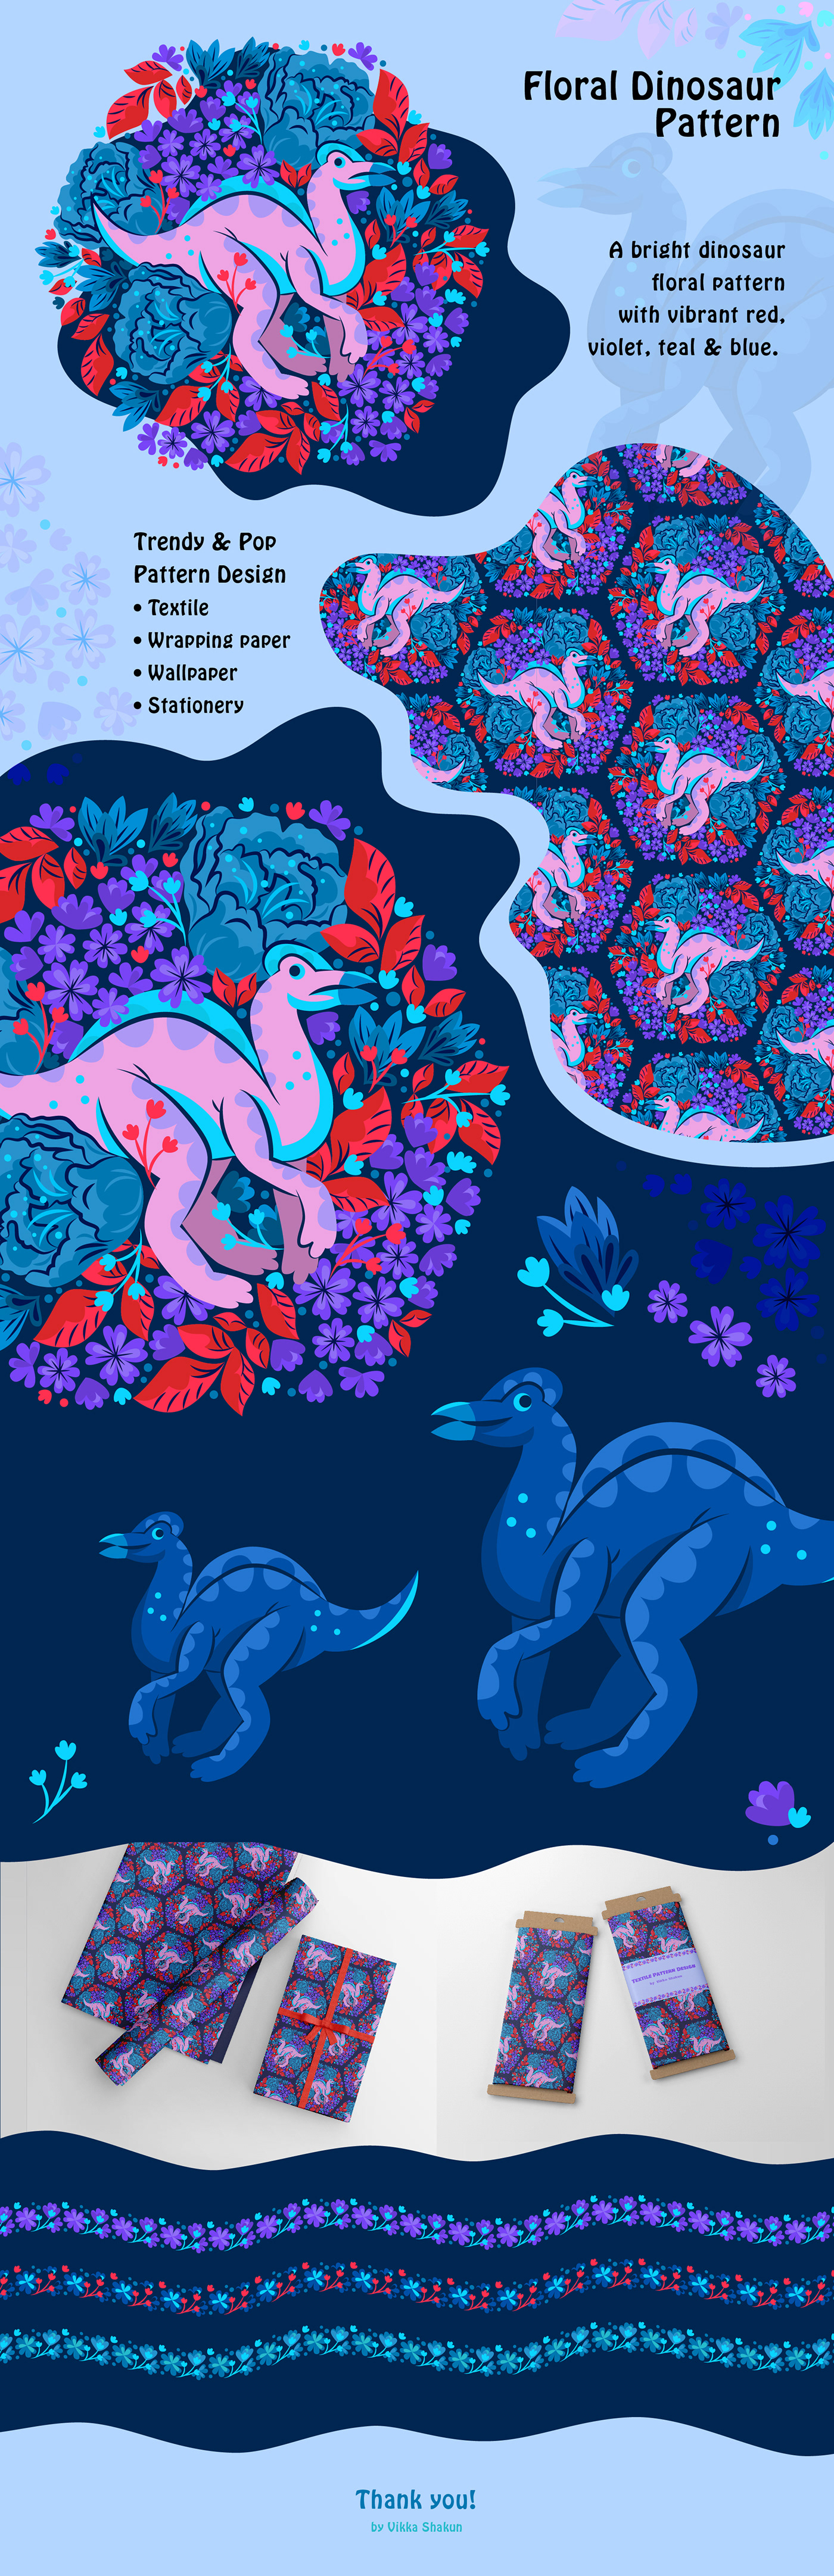 cartoon digital illustration Graphic Designer branding  pattern design  textile fabric textile design  ILLUSTRATION  Dinosaur